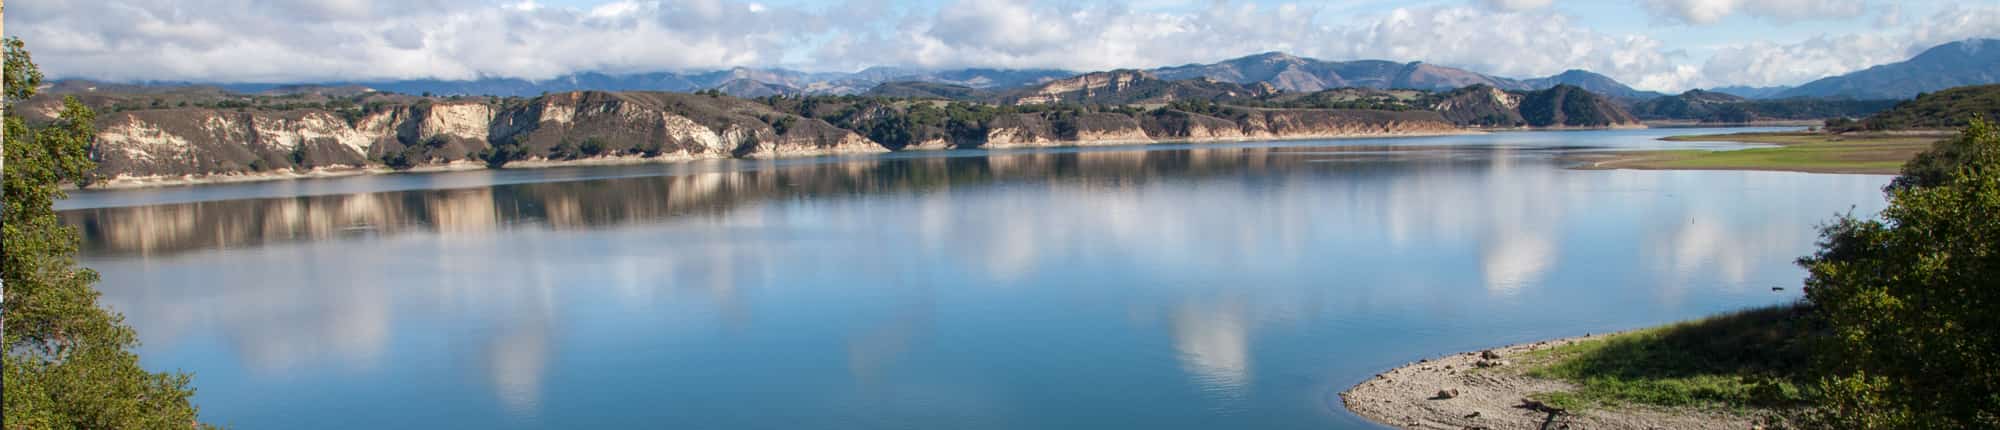 Lake Cachuma, Santa Ynez, California.